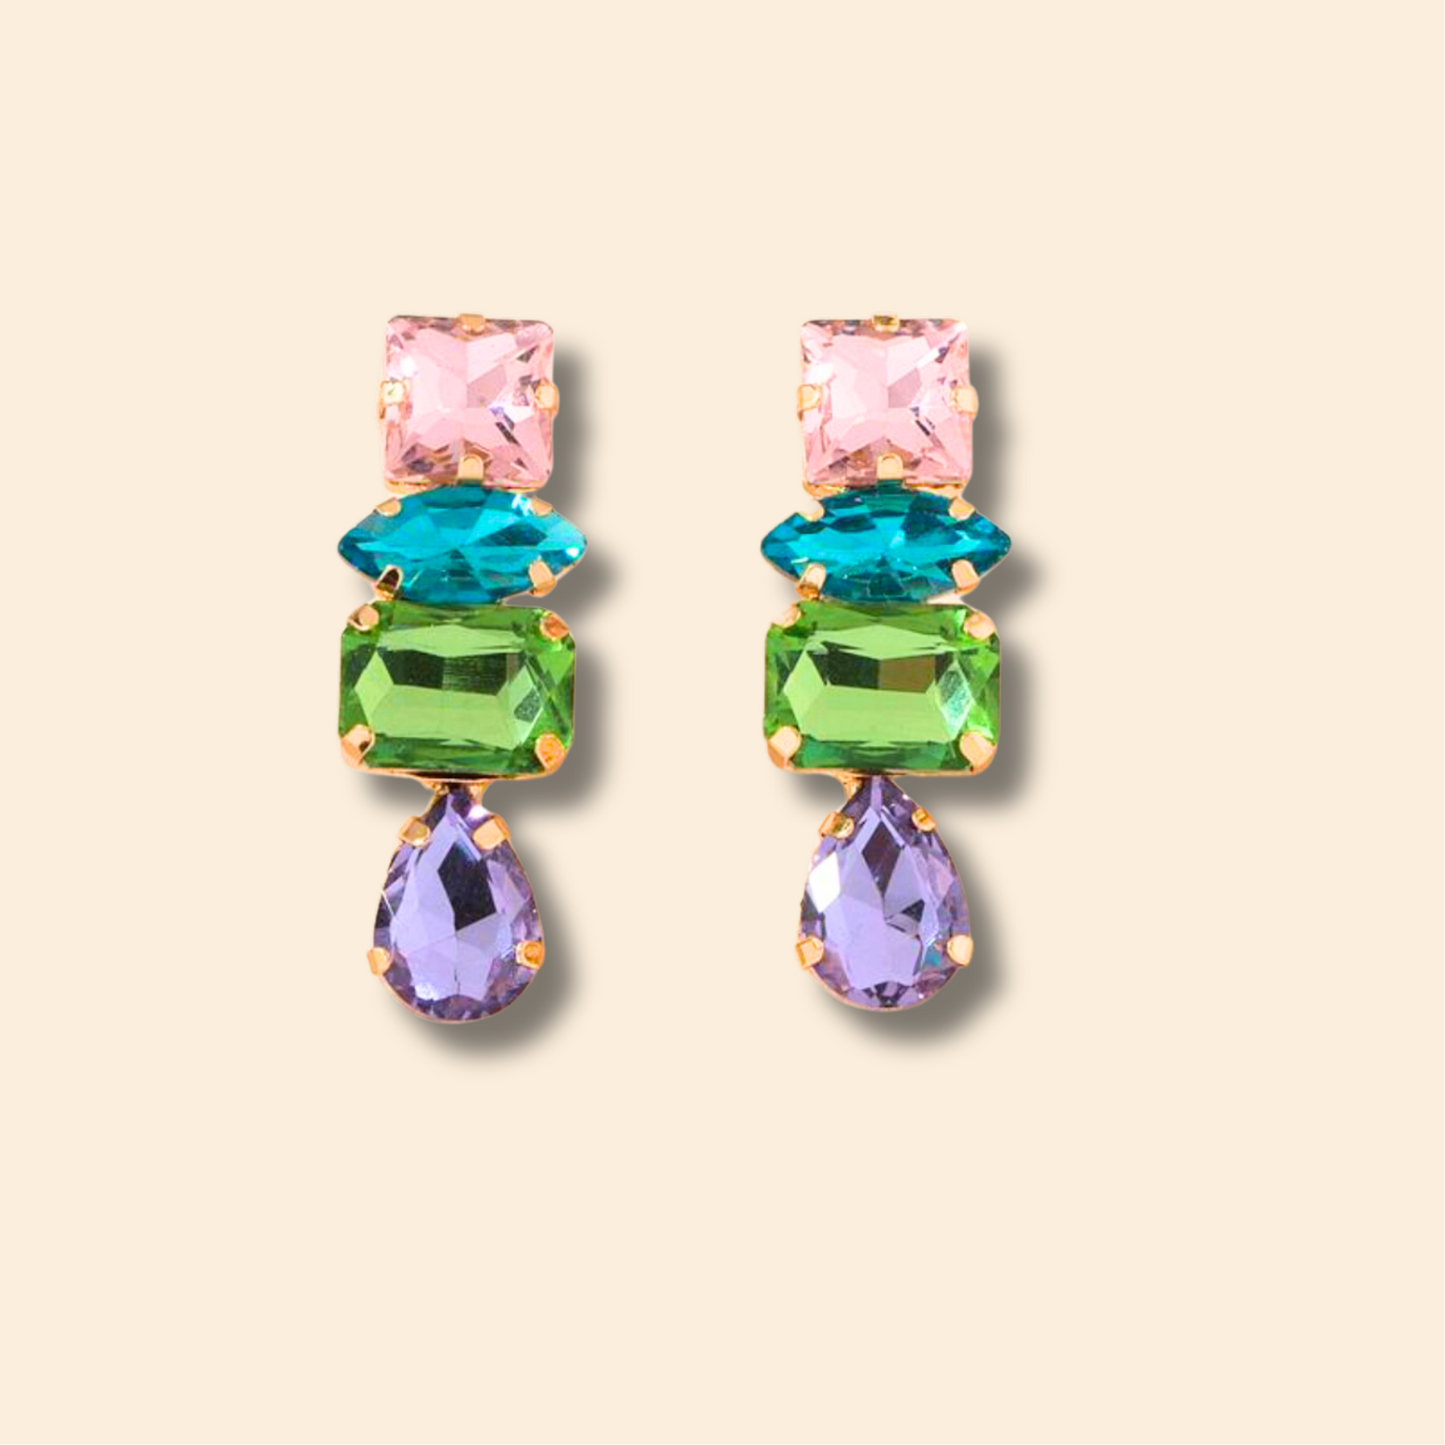 Bejeweled Statement Earrings